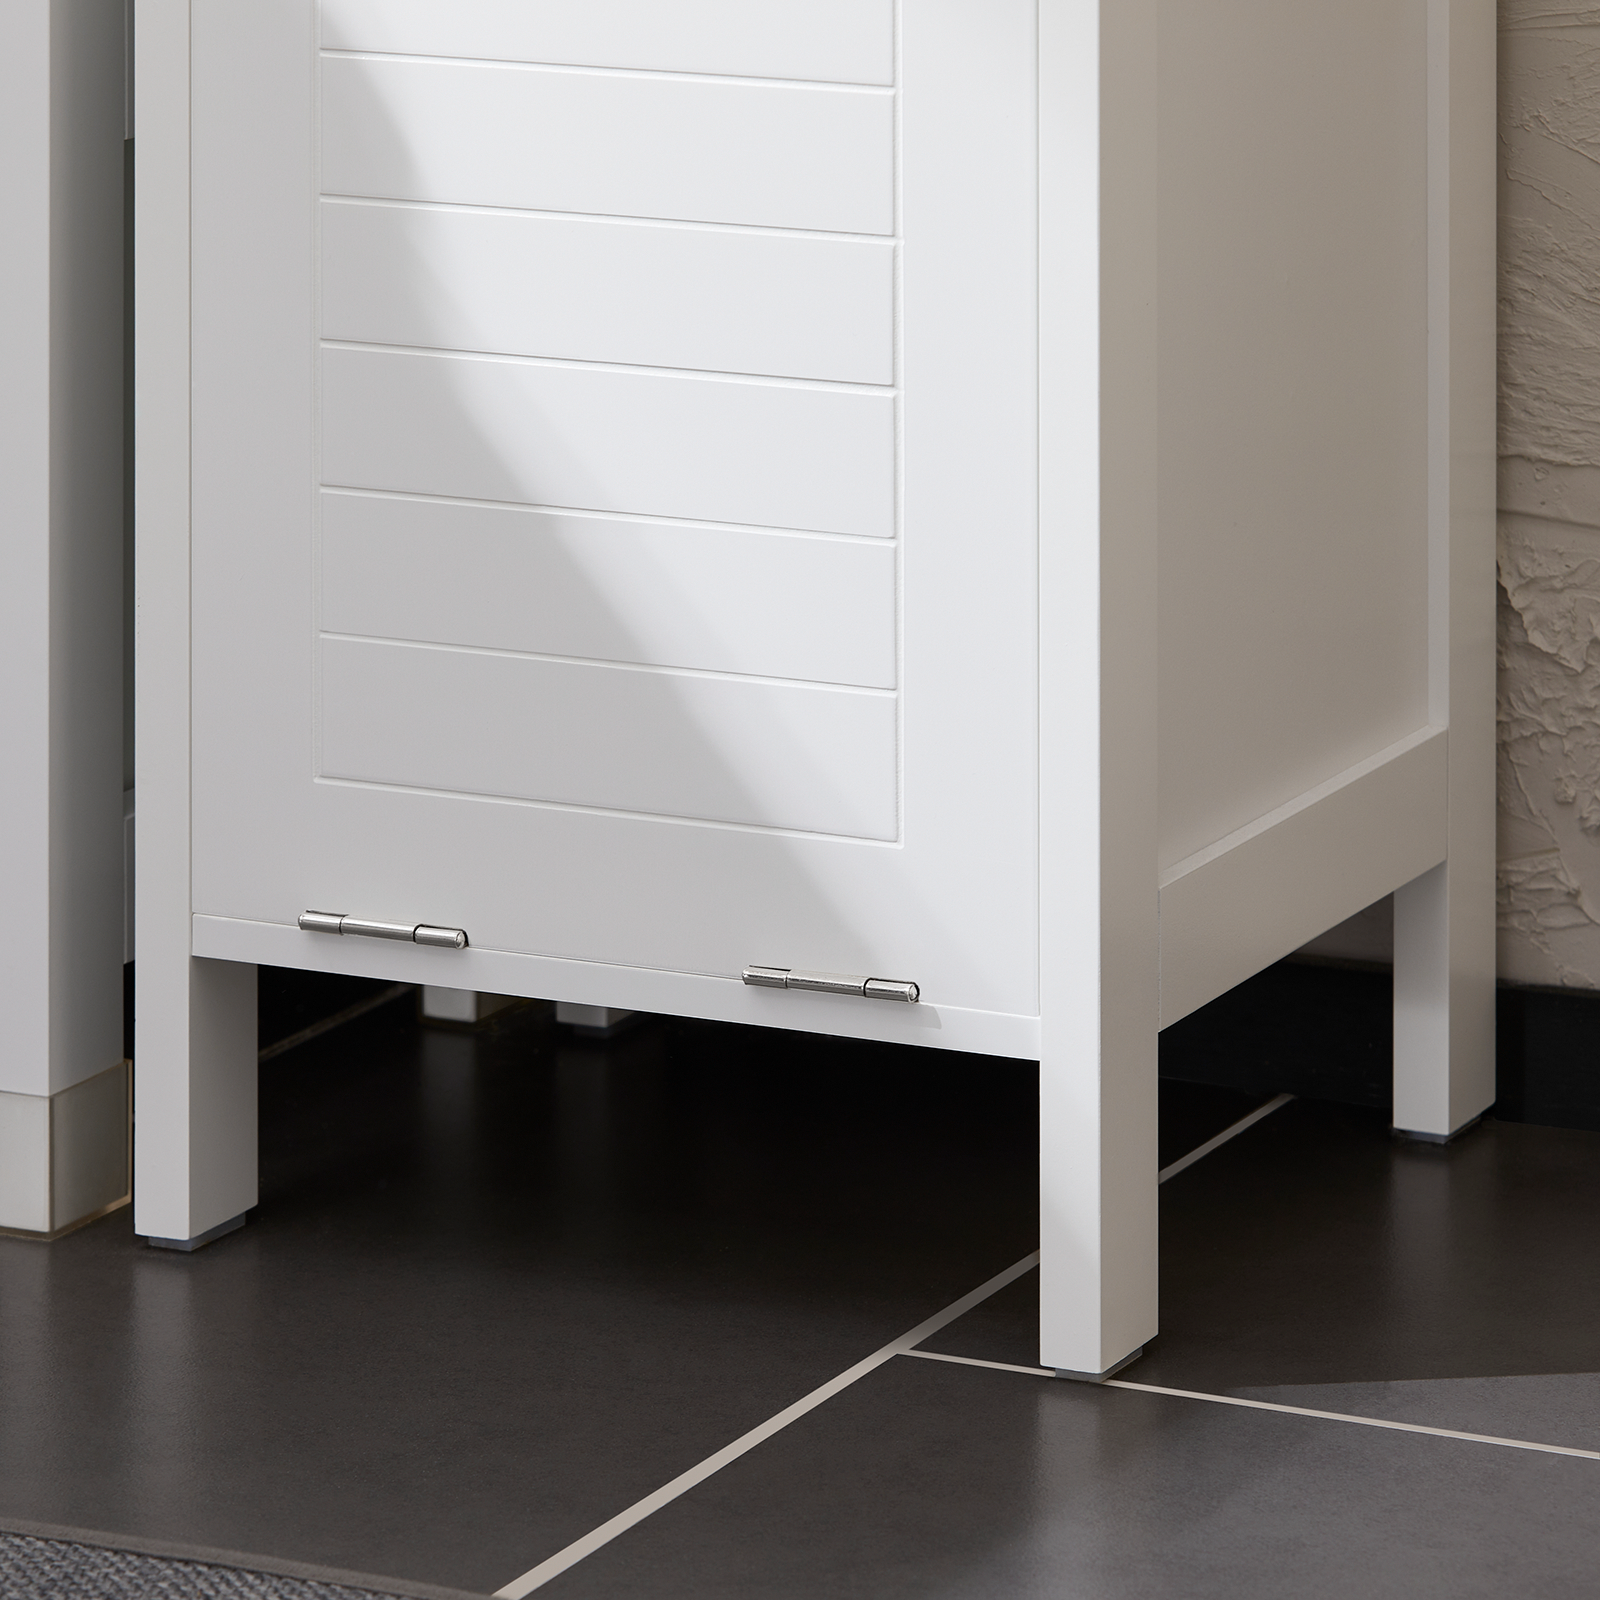 SoBuy BZR123-W, Bathroom Tall Cabinet Bathroom Storage Cabinet With Laundry Basket